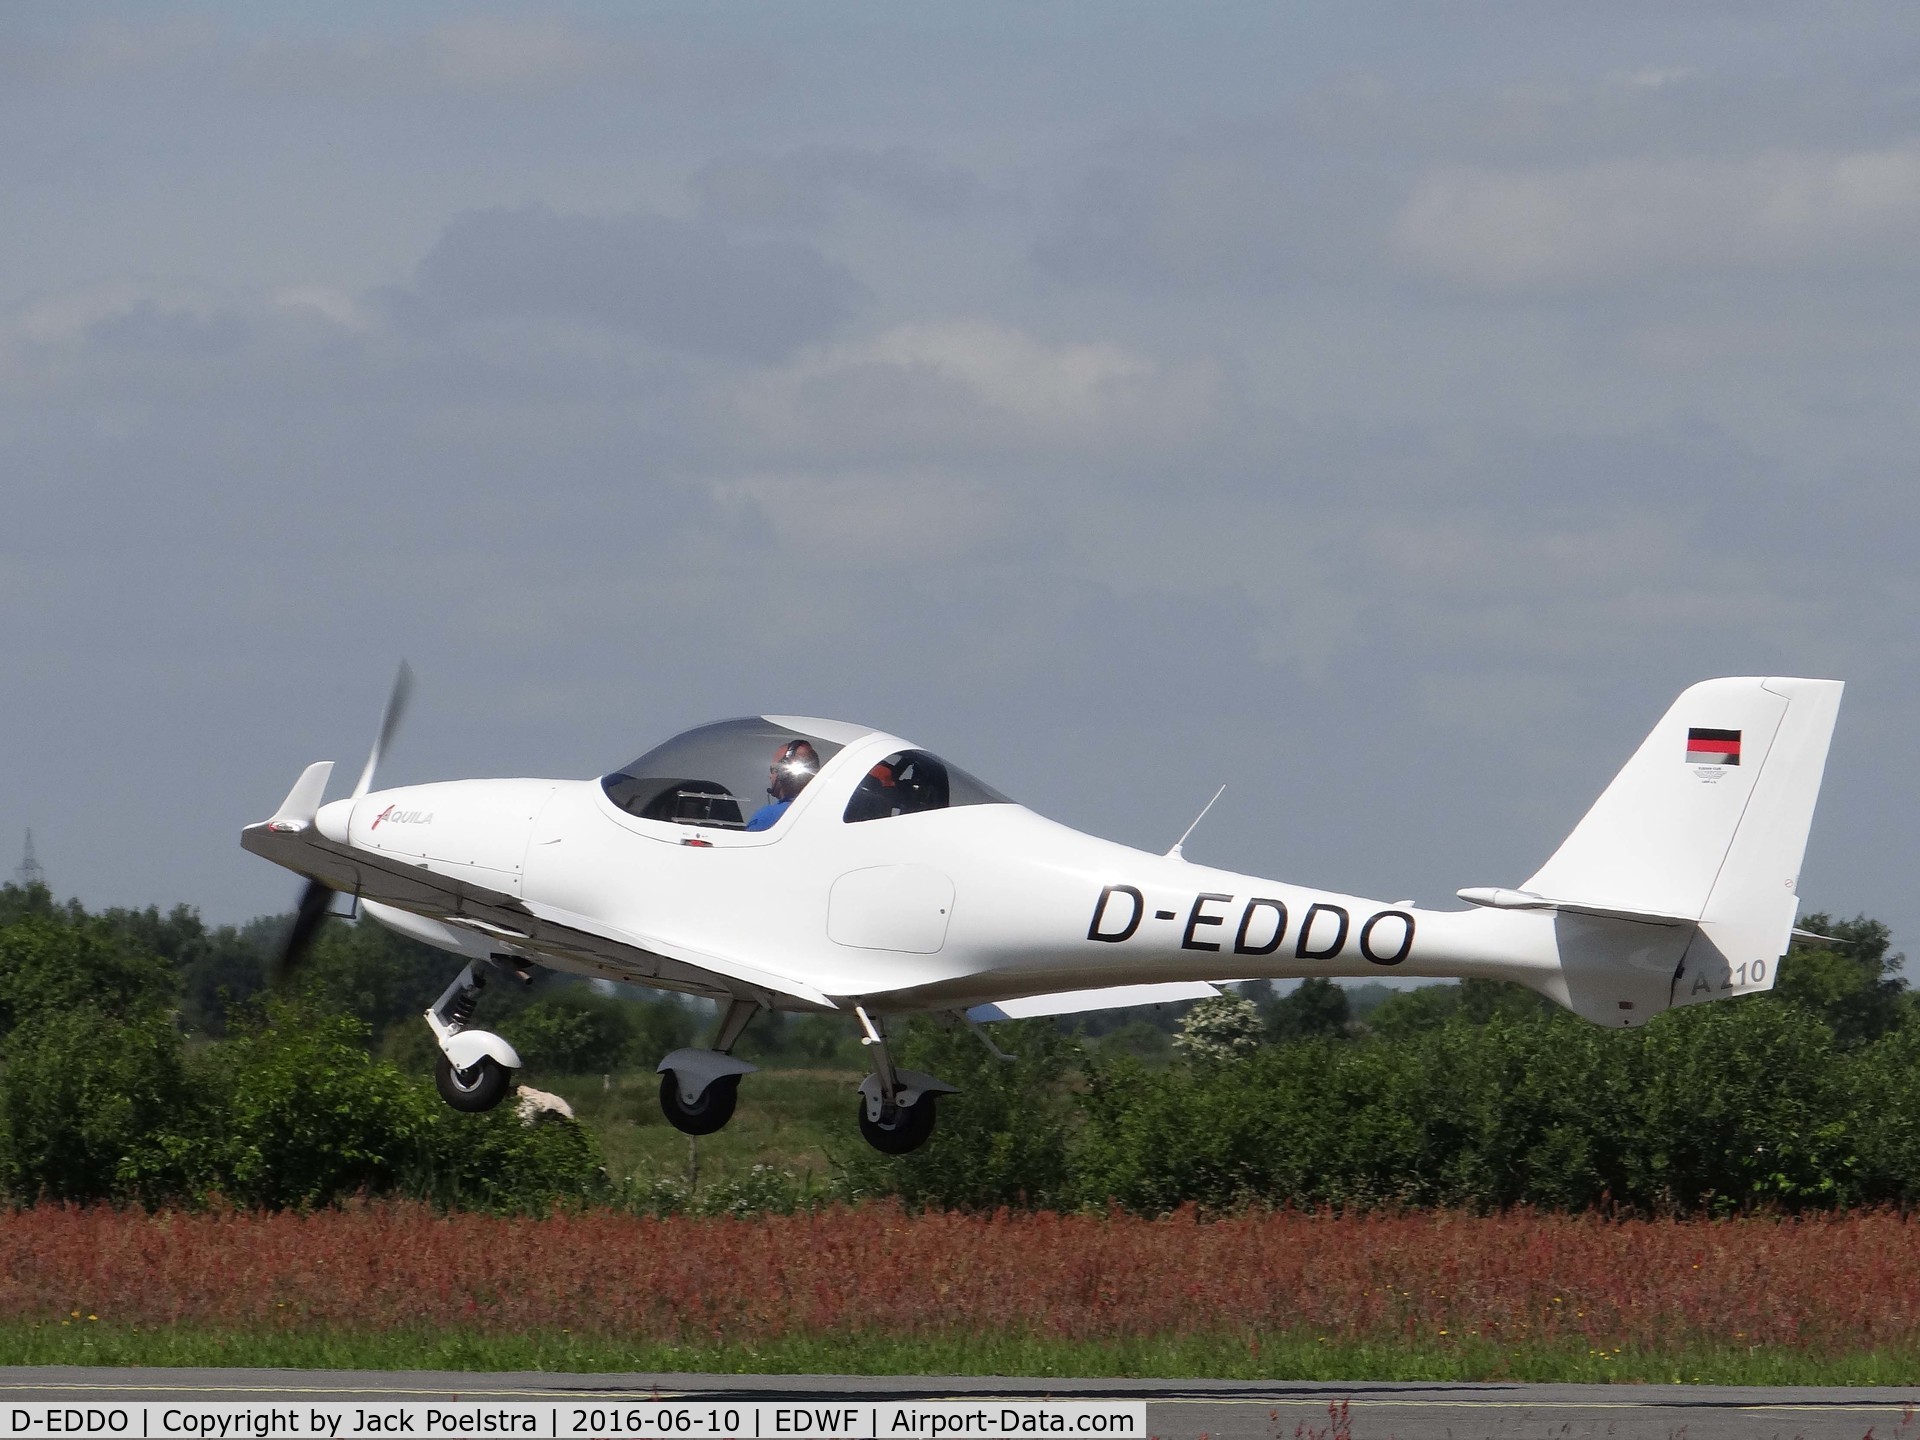 D-EDDO, 2012 Aquila A210 (AT01) C/N AT01-241, D-EDDO at Leer airport